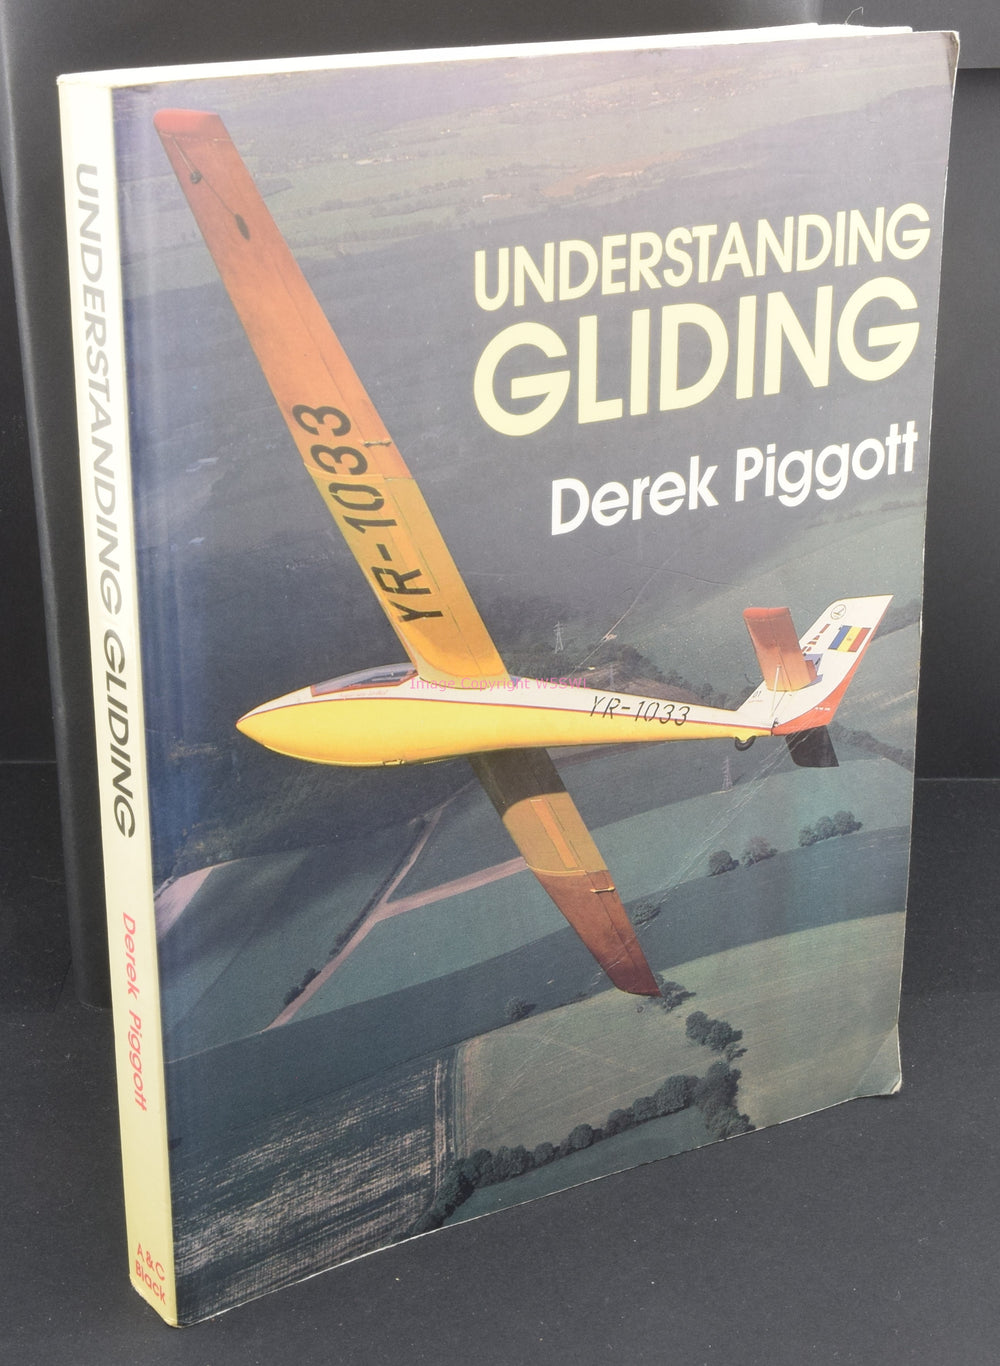 Understanding Gliding by Derek Piggott The Principles of Soaring Flight - Dave's Hobby Shop by W5SWL